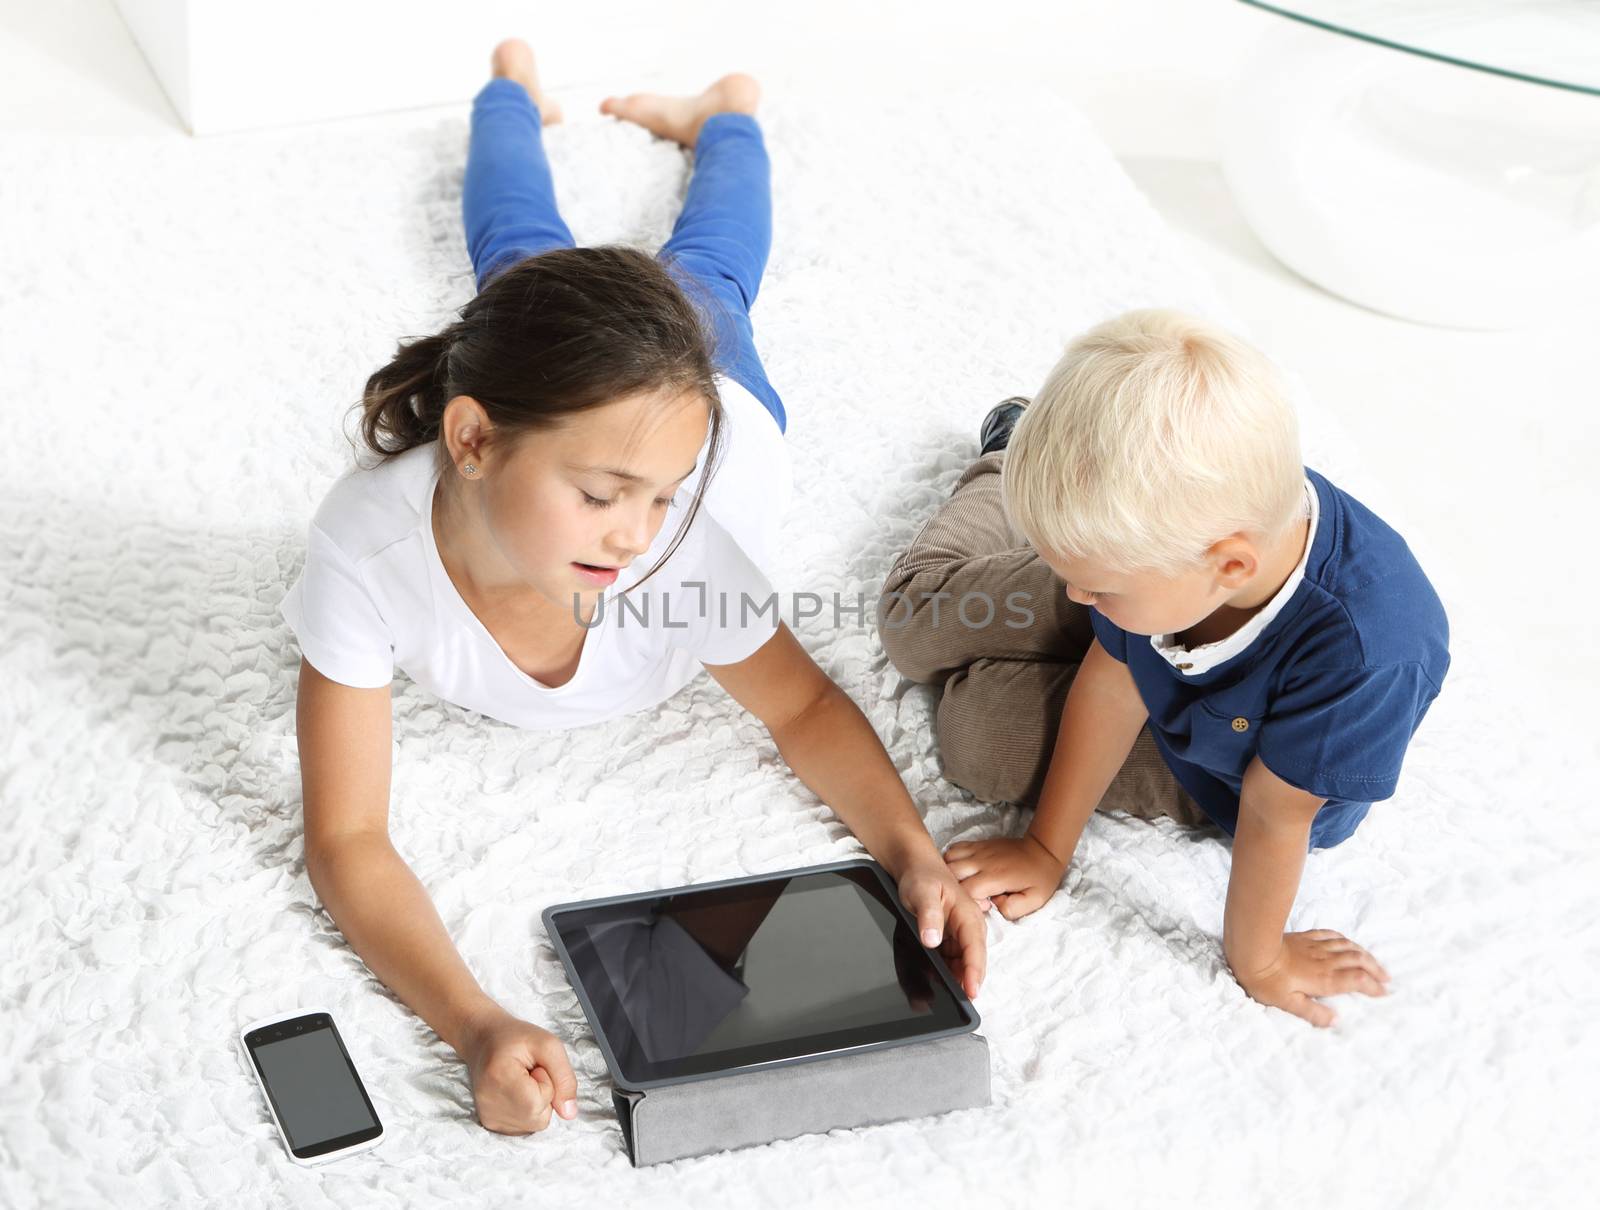 Children look tablet by robert_przybysz